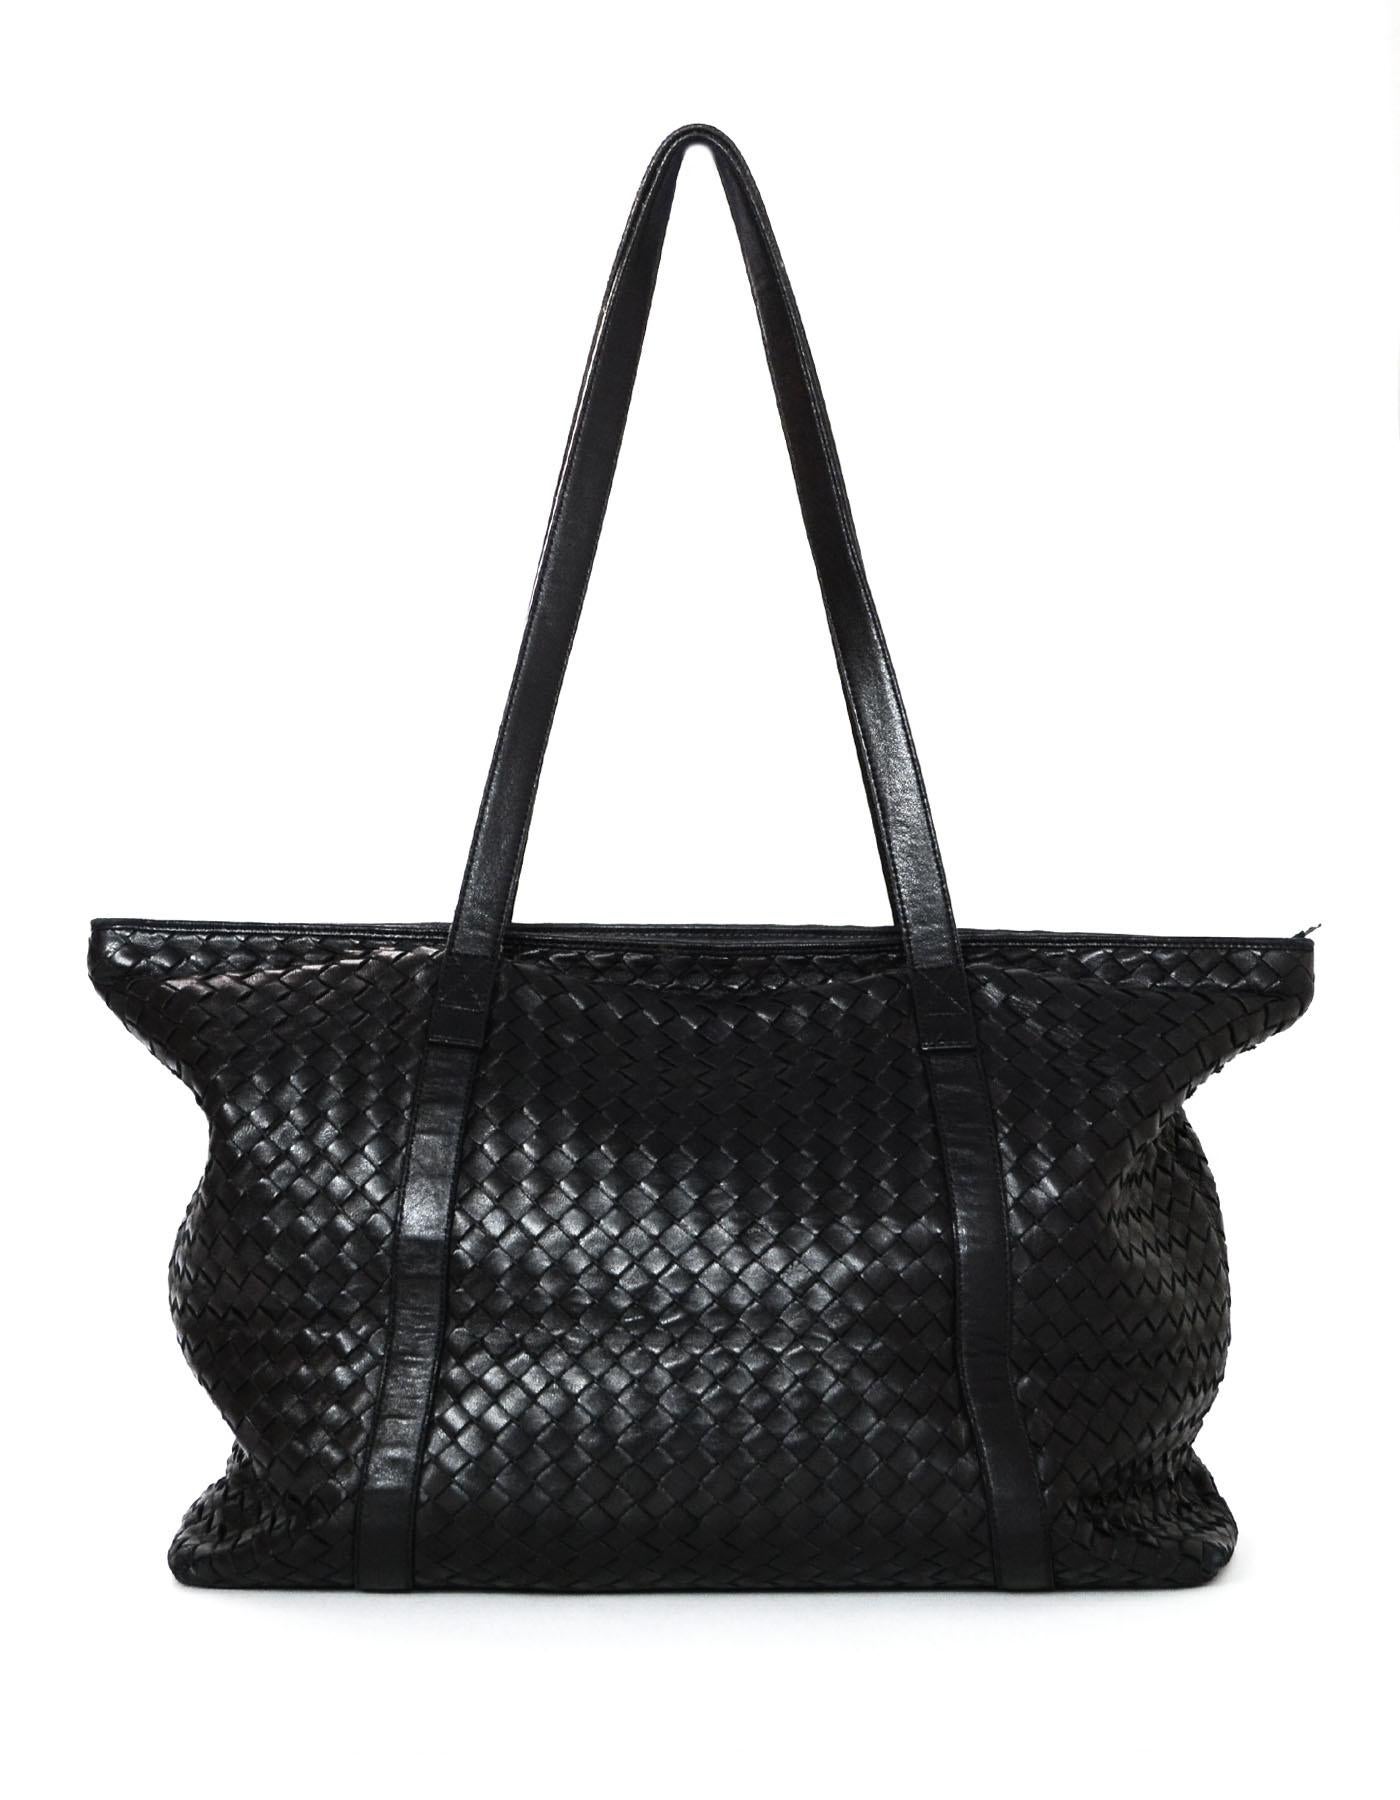  Bottega Veneta Black Woven Leather Intrecciato Tote Bag 1